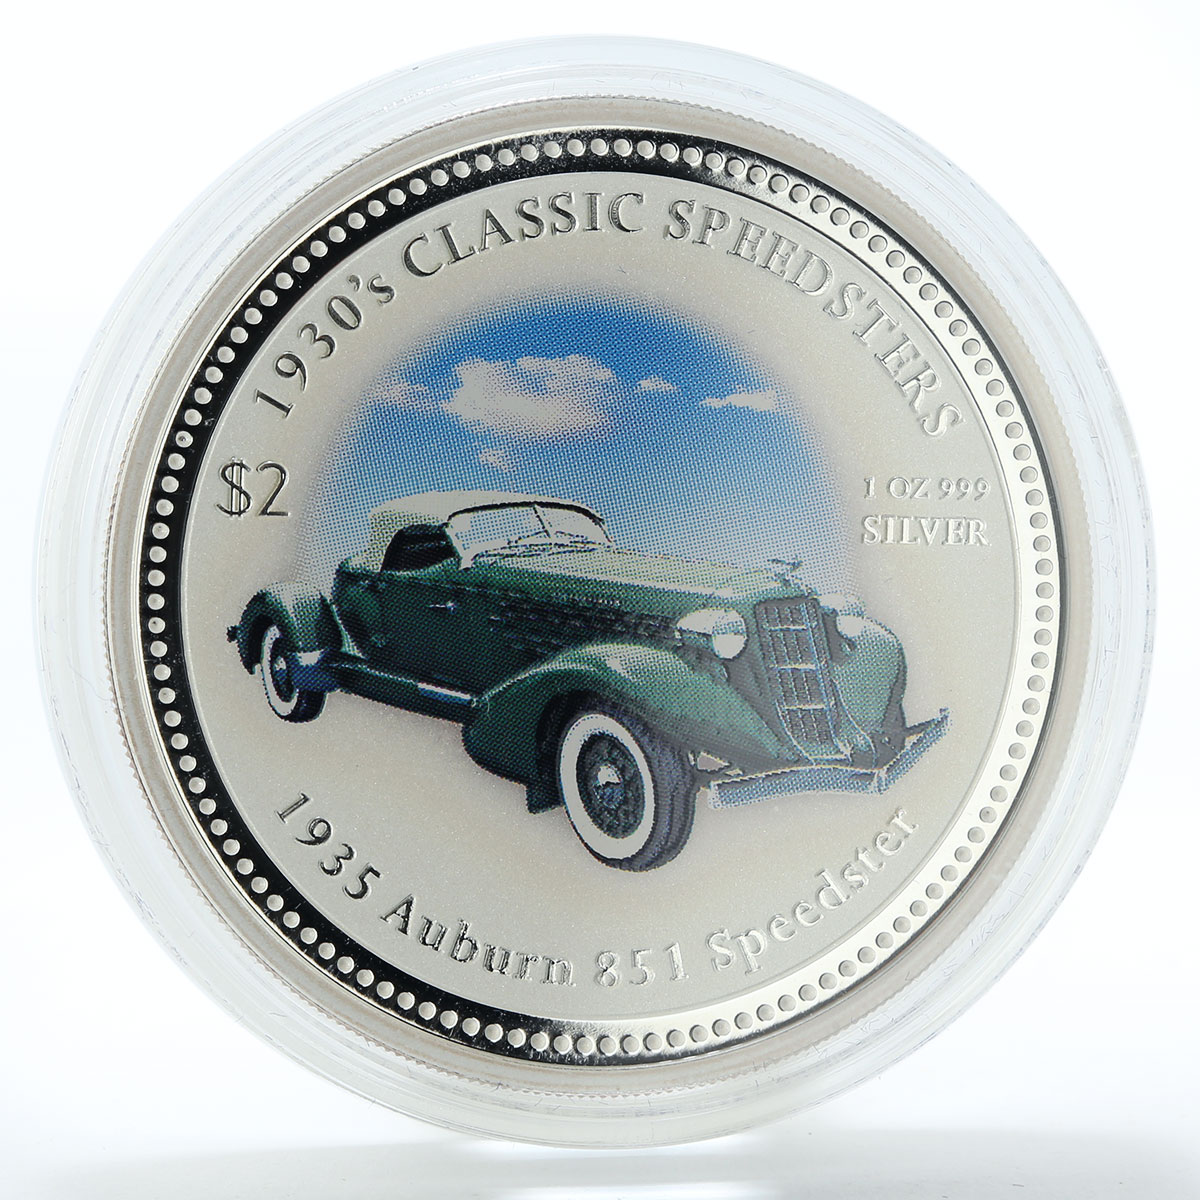 Cook Islands 2 dollars 1935 Auburn 851 Speedster silver coin 2006